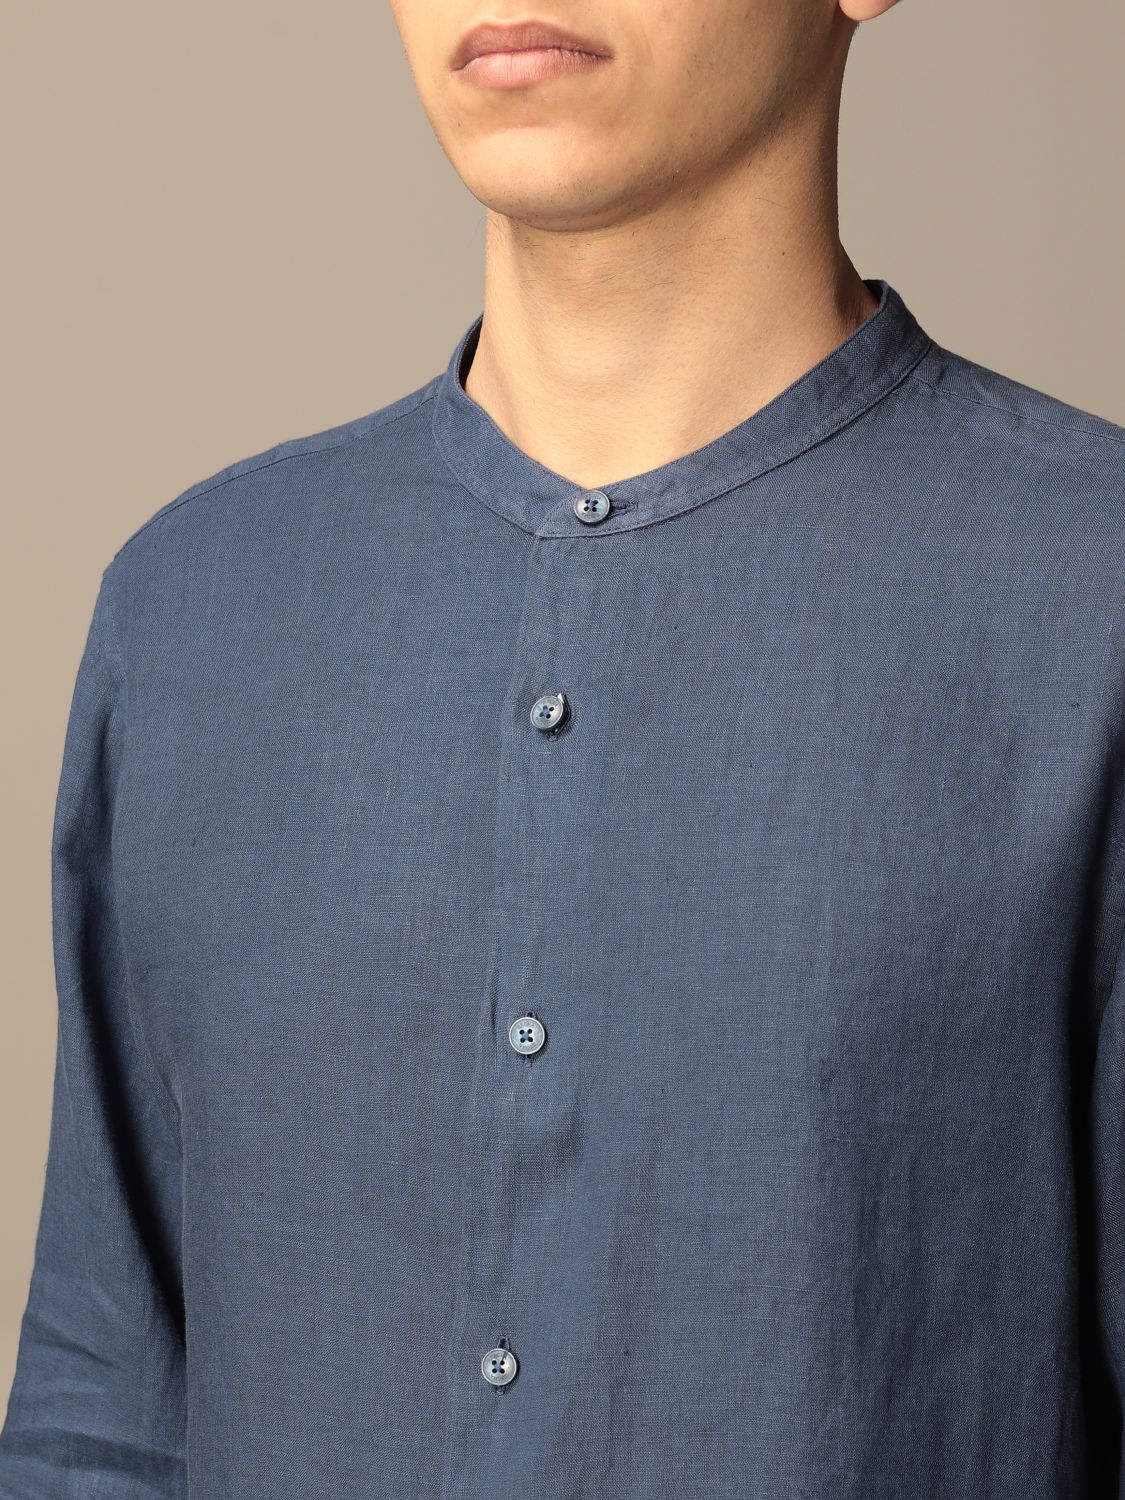 Shirt Z Zegna: Z Zegna shirt in washed linen with mandarin collar navy 4